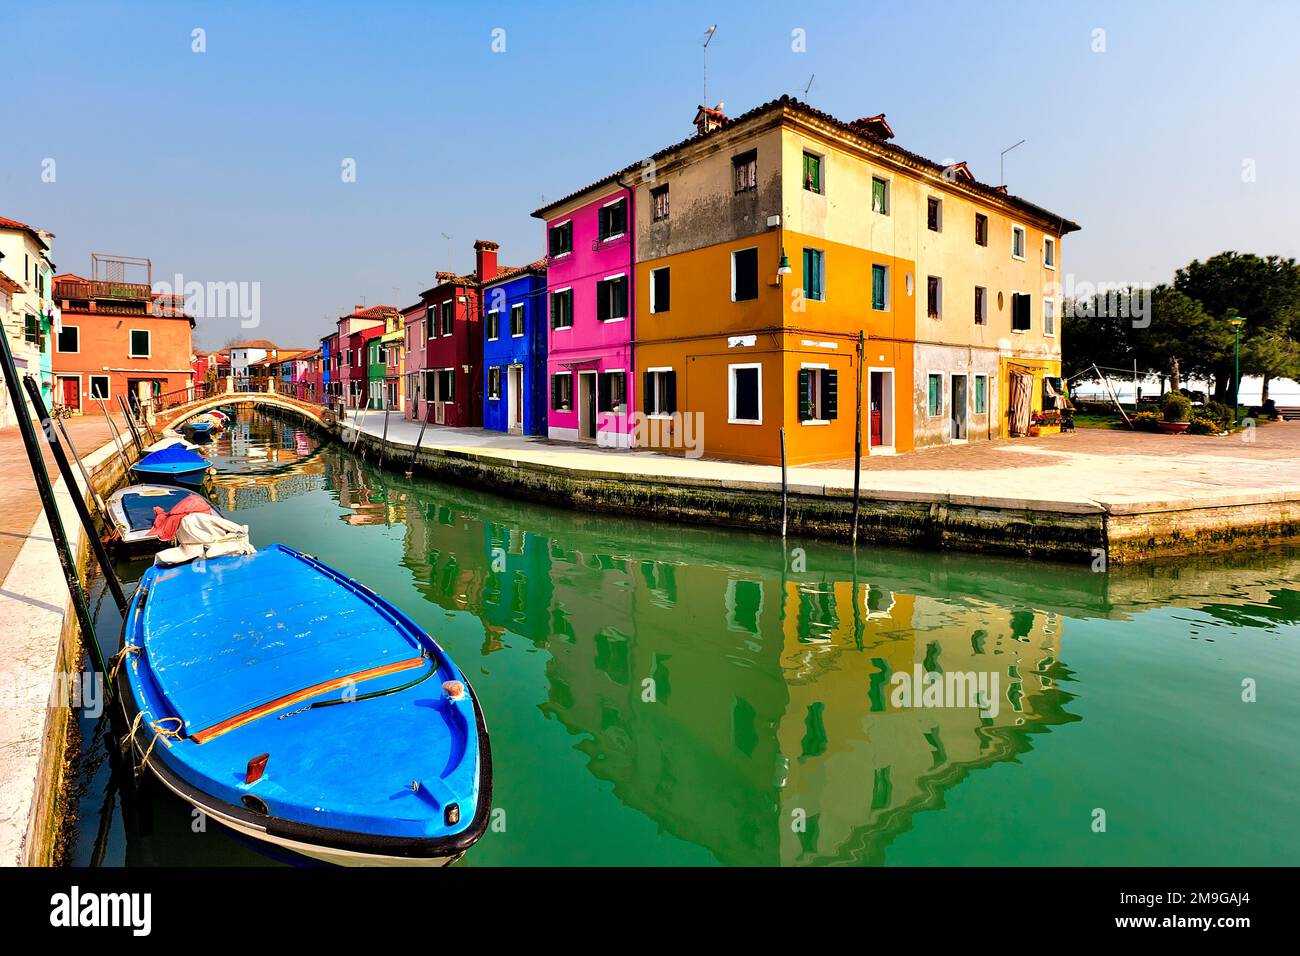 Lebendige bunten Stadthäuser am Ufer des Kanals, Burano Island, Venedig, Italien Stockfoto